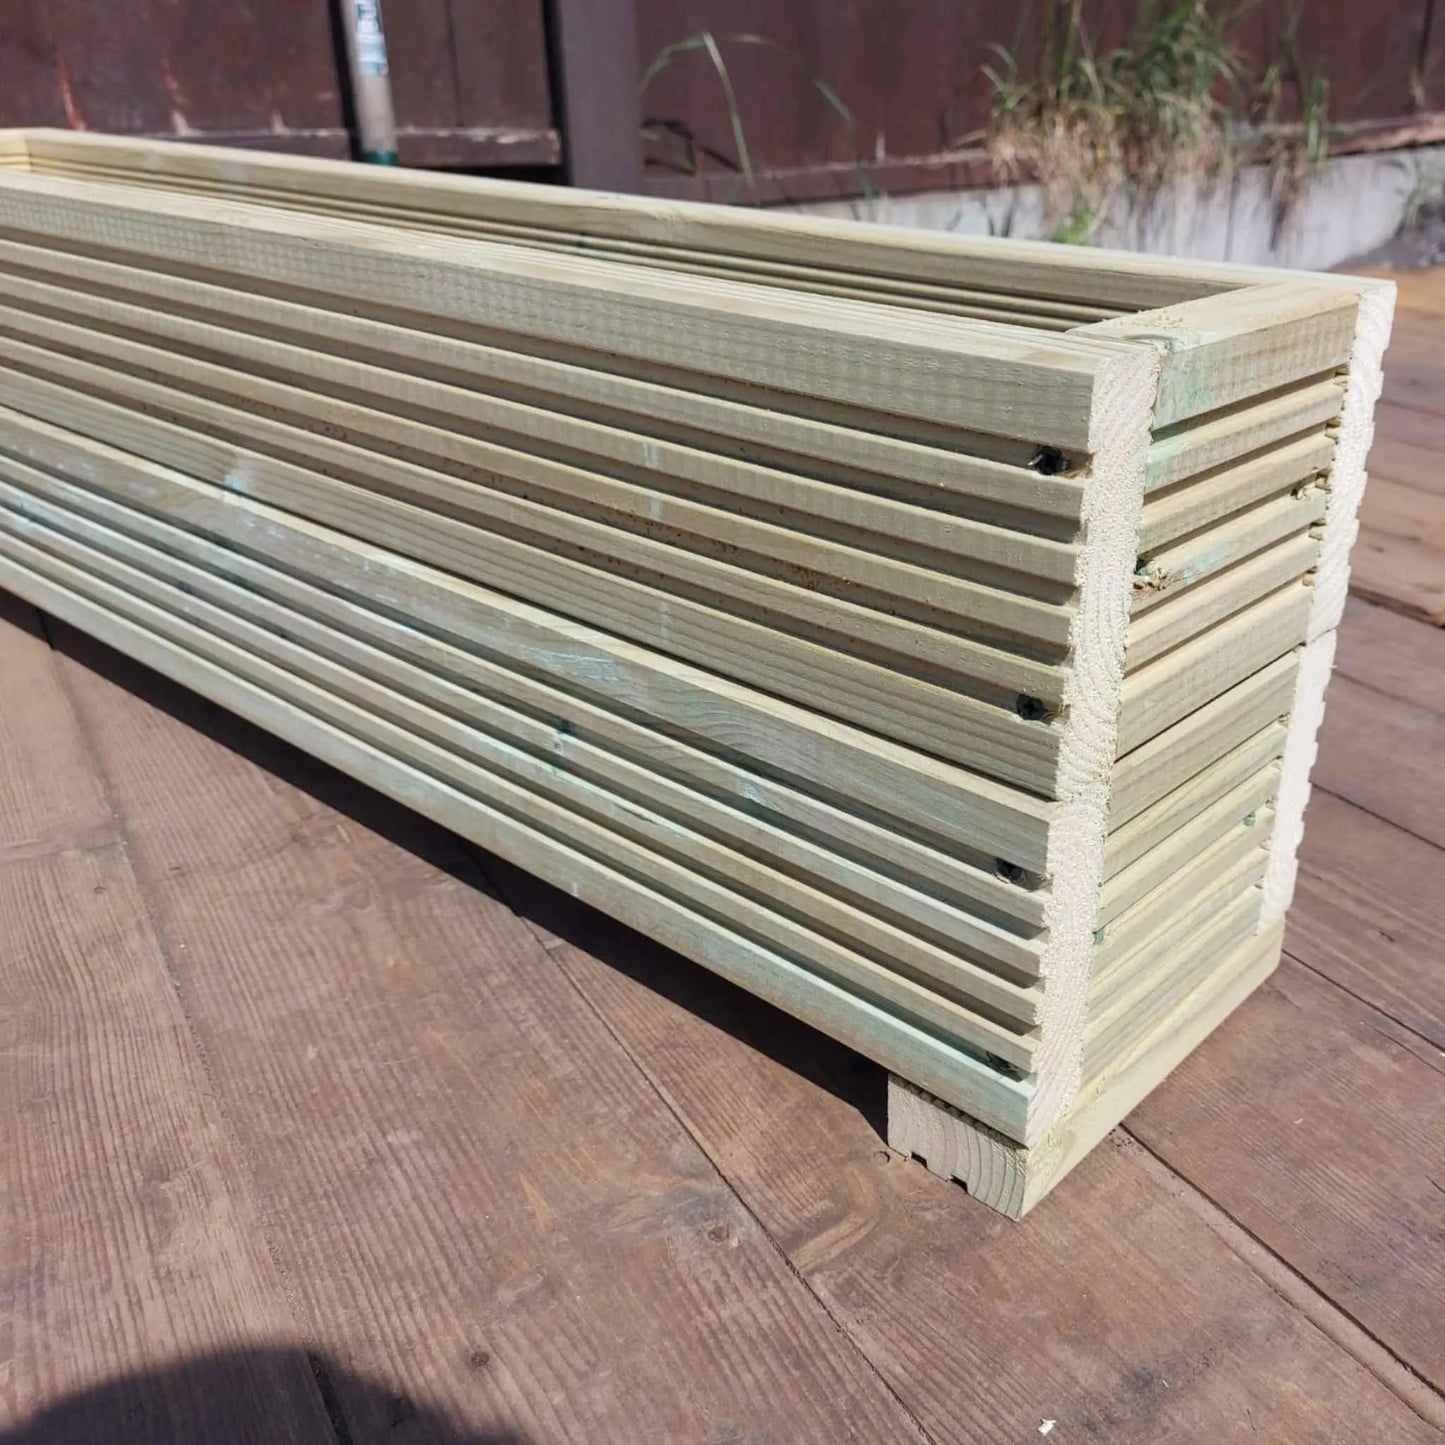 90cm long double tier wooden decking planter - Summer Wooden Planters